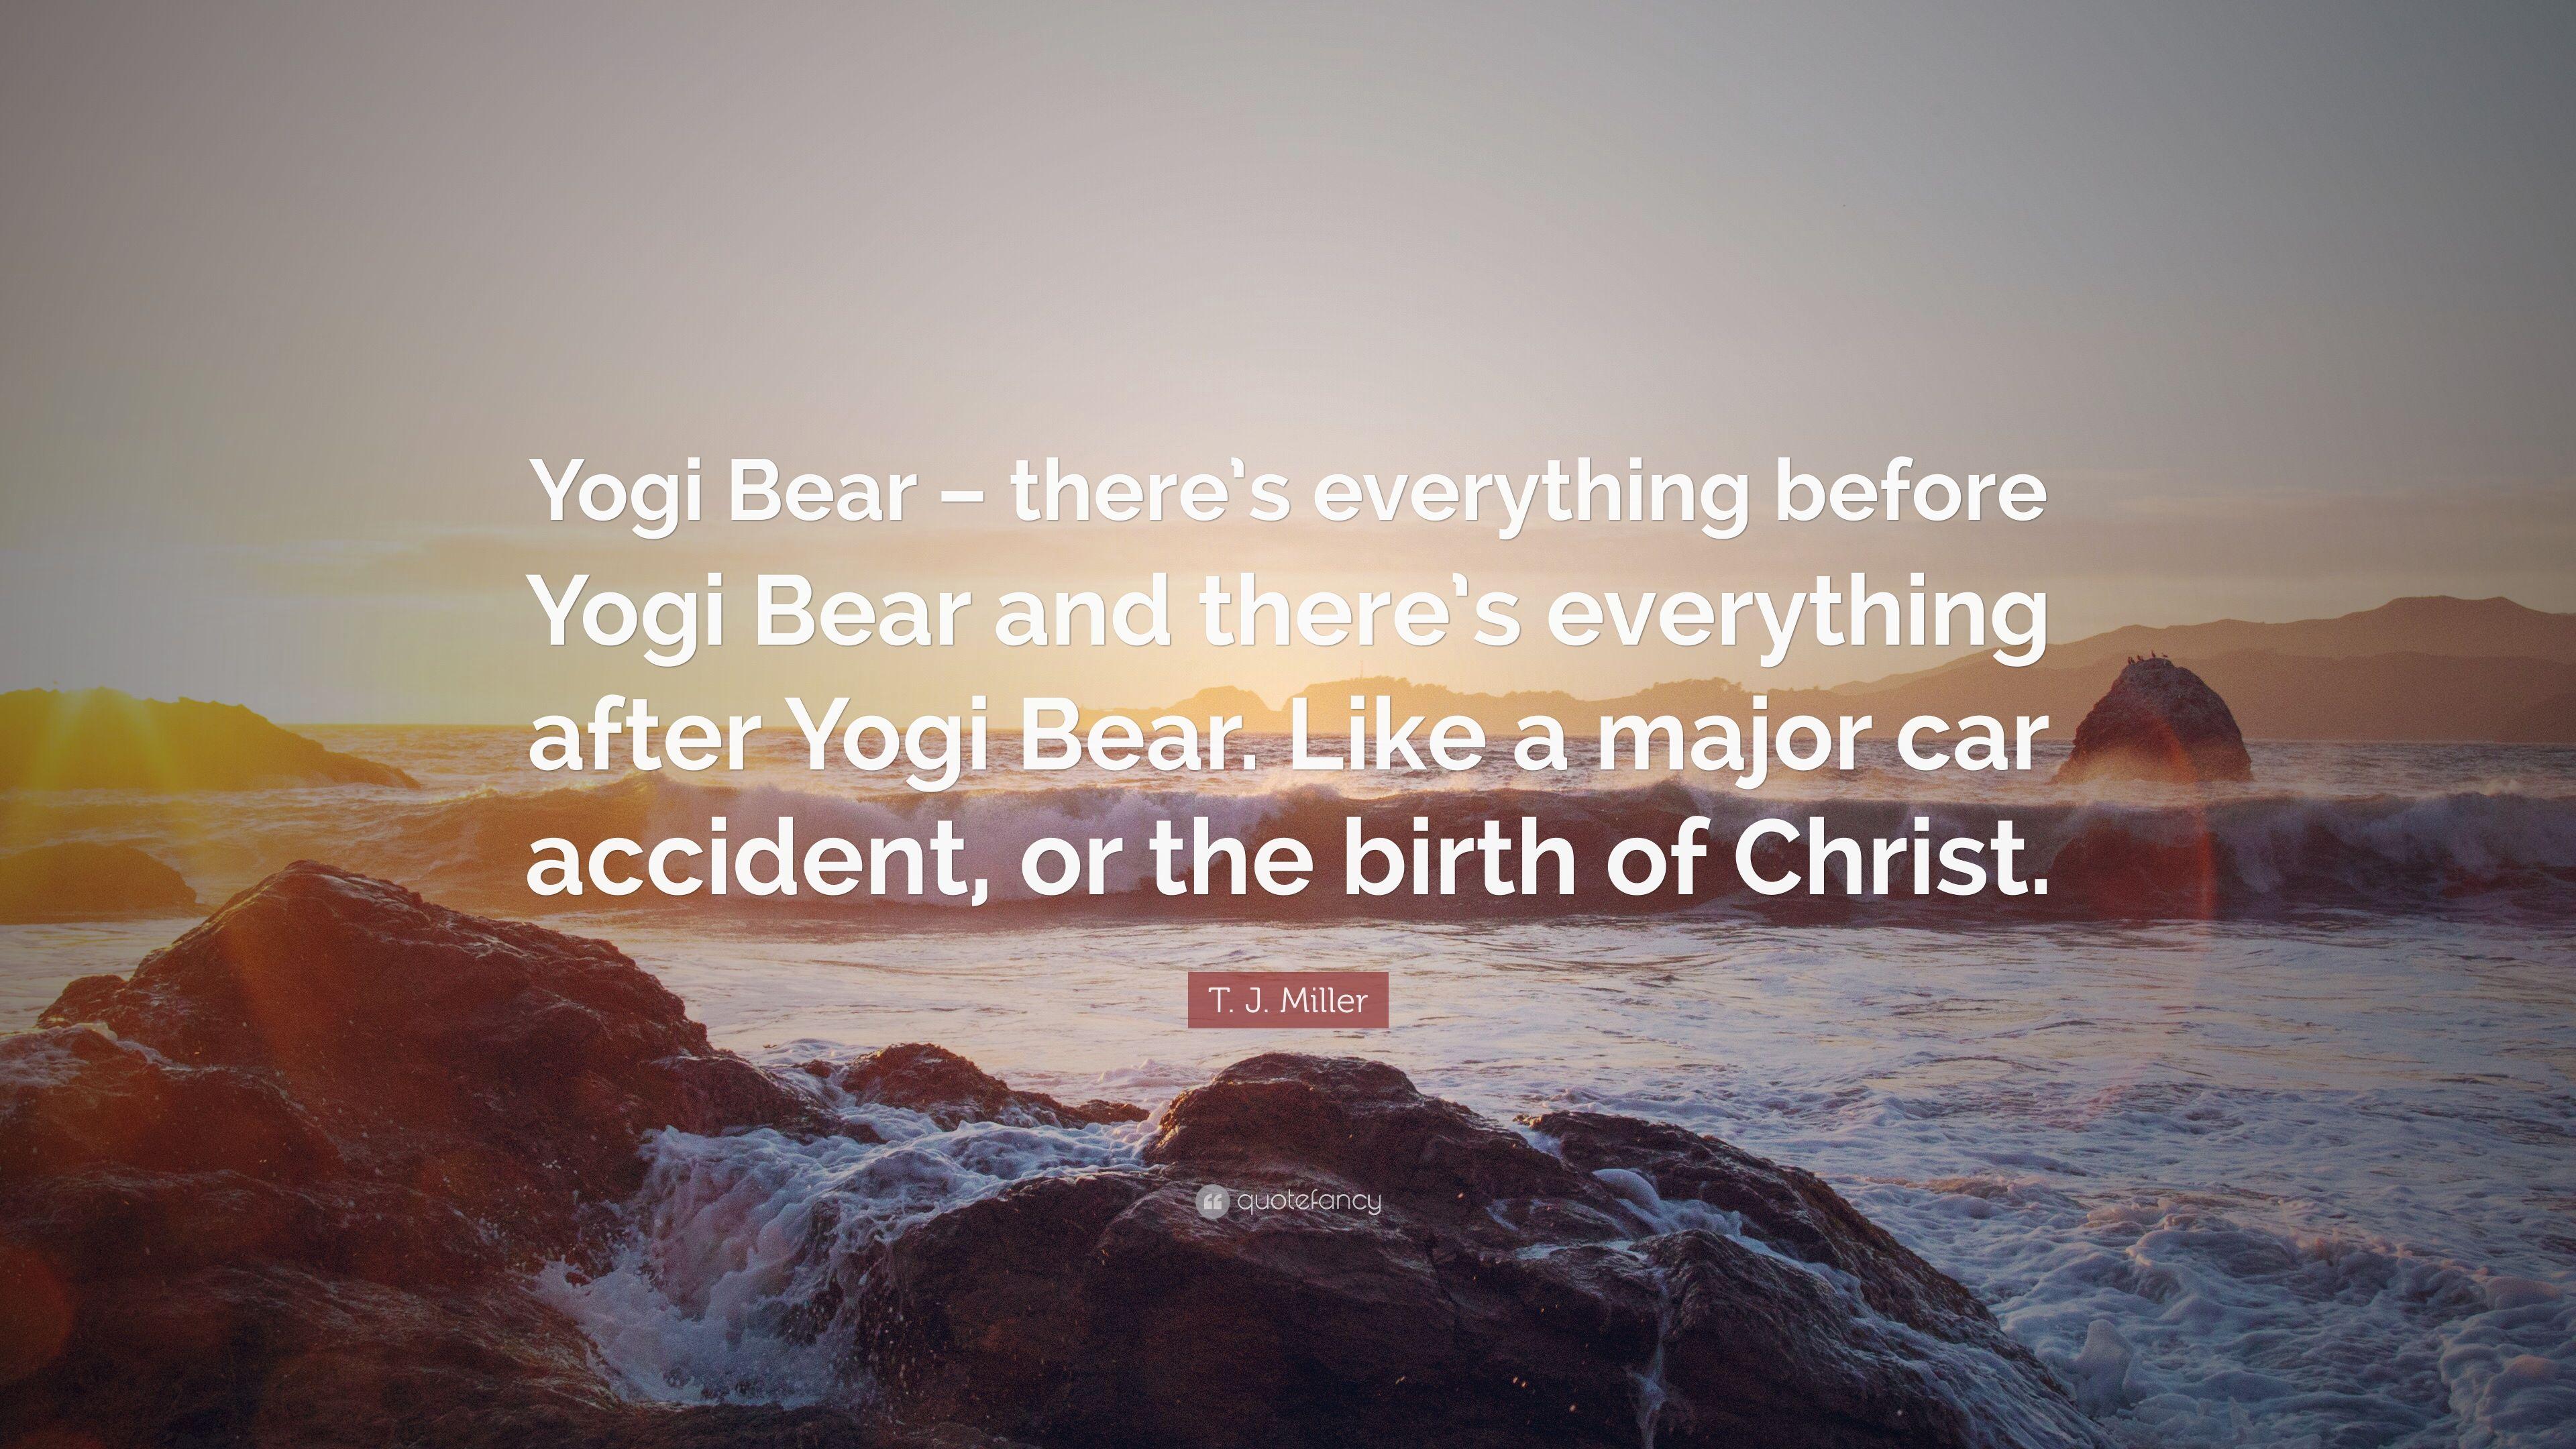 T. J. Miller Quote: “Yogi Bear